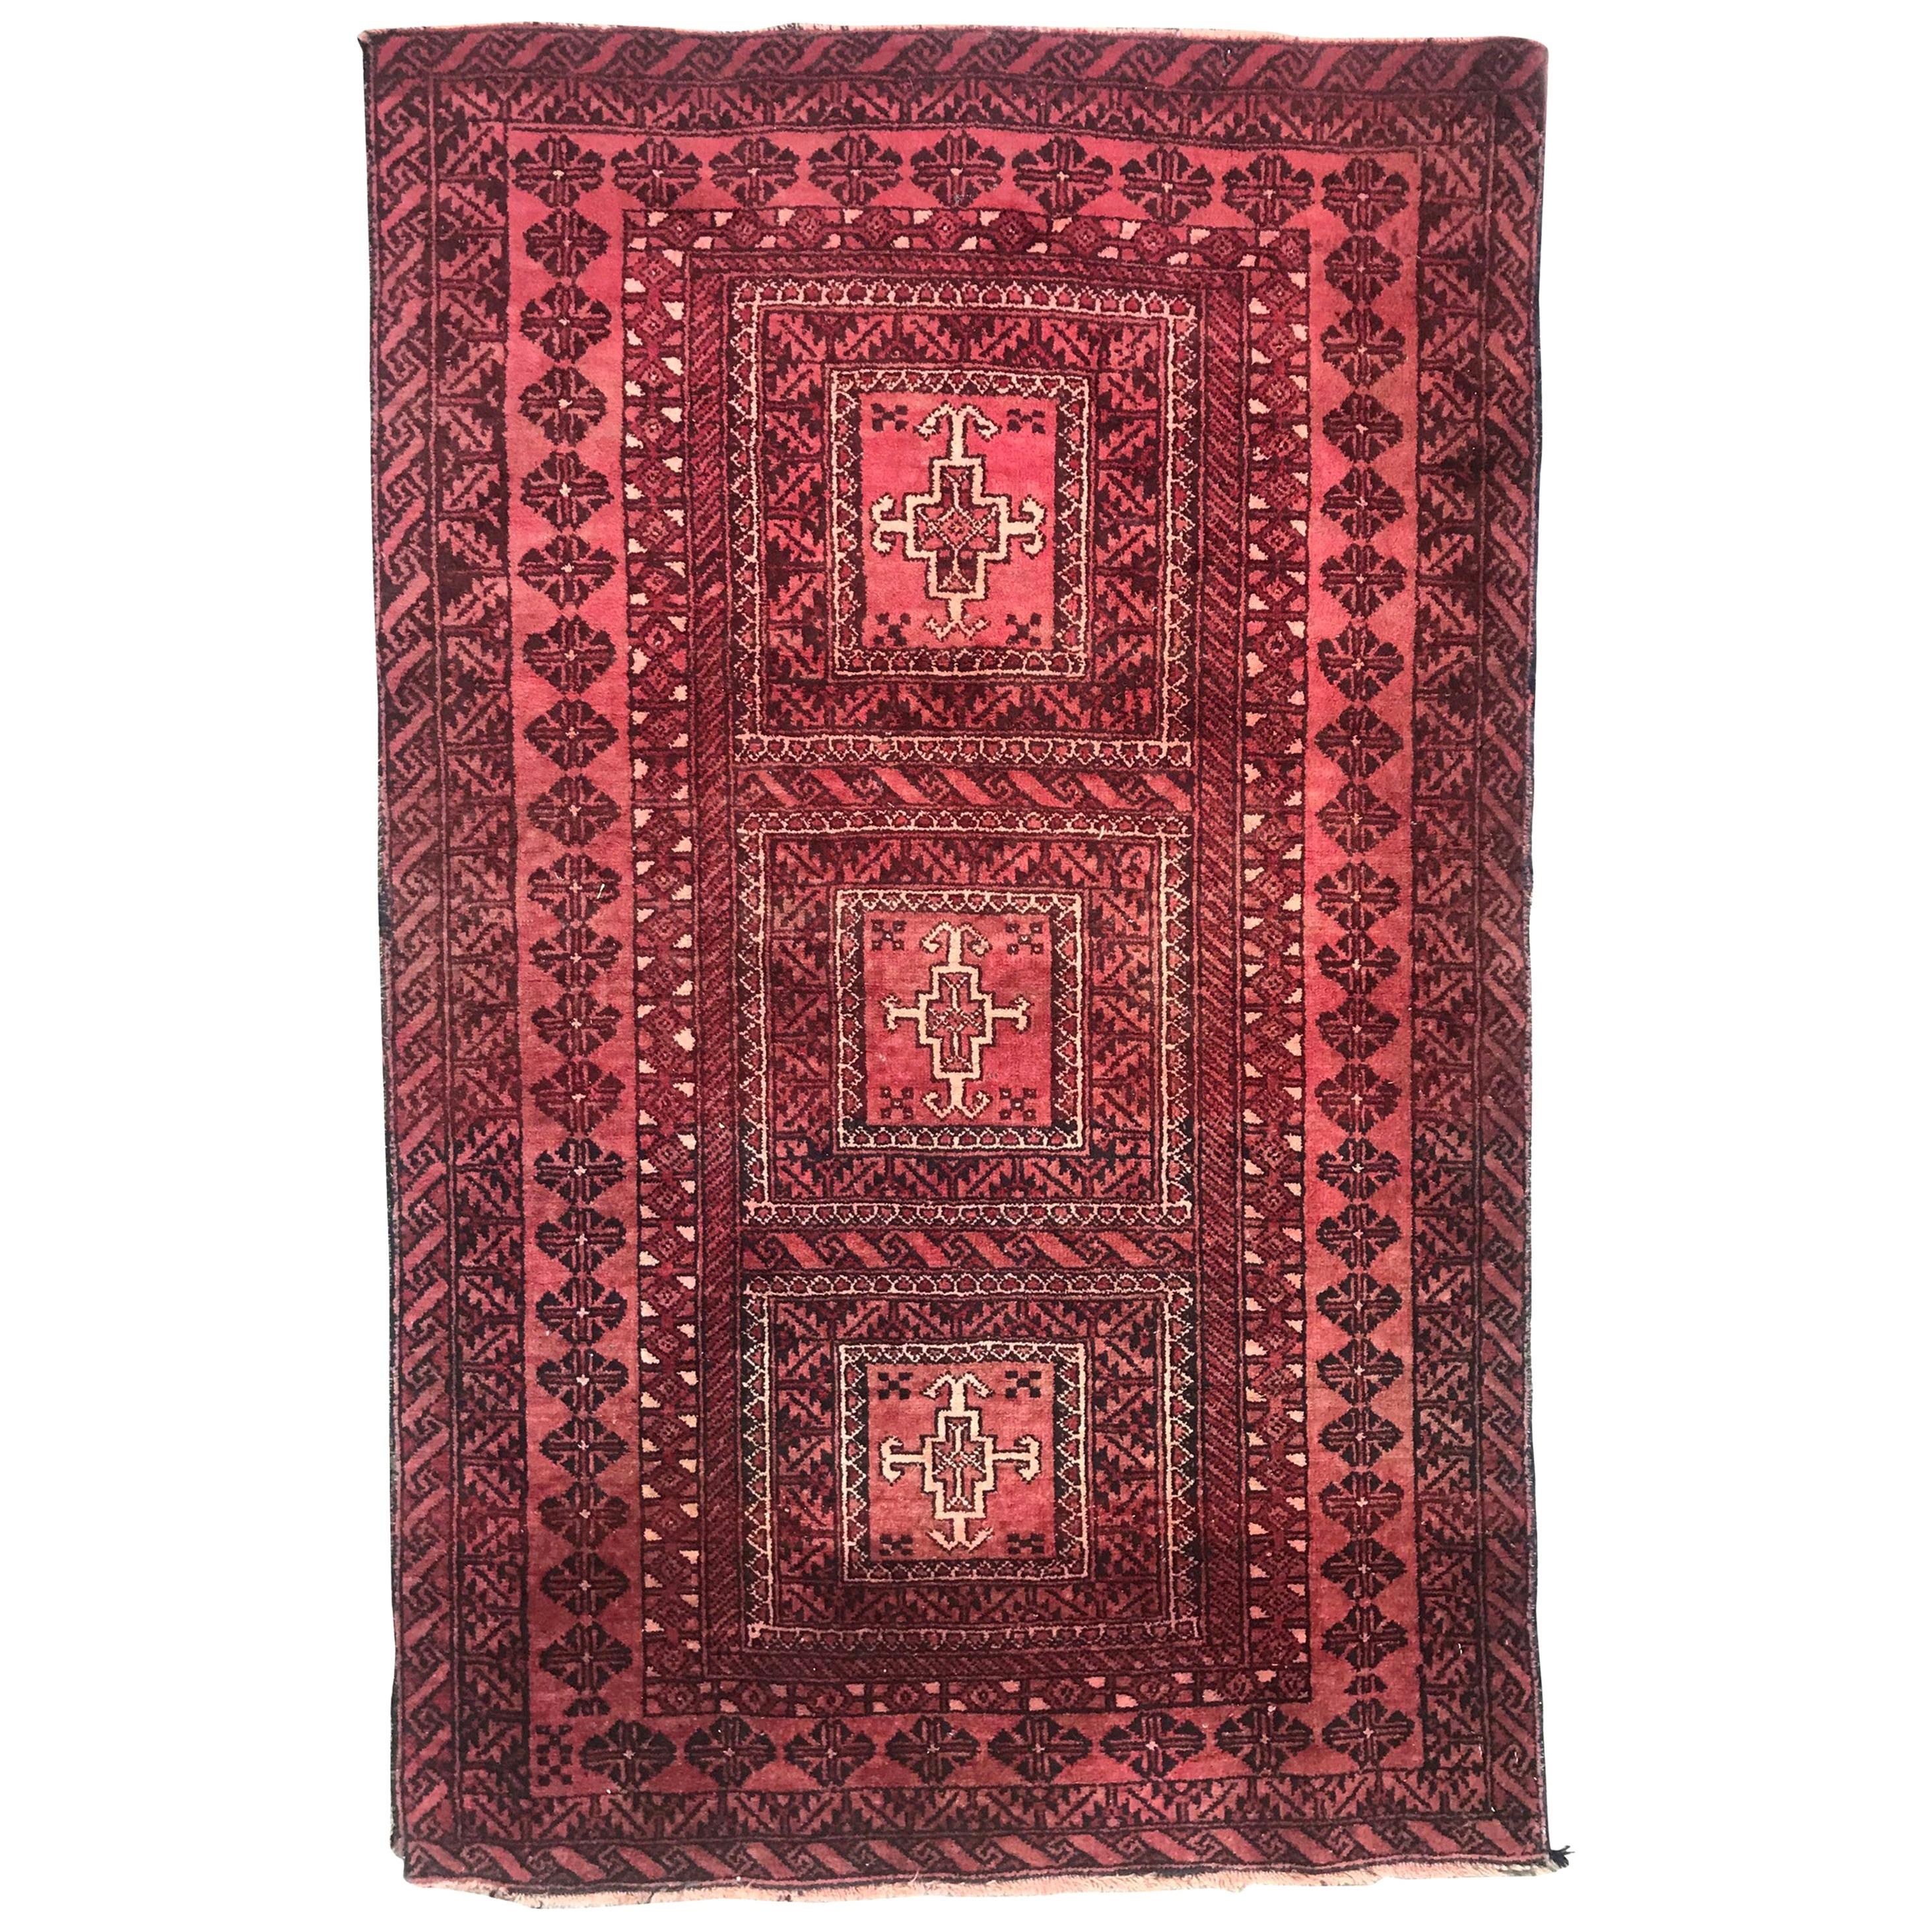 Beau tapis de baluchon turc vintage en vente